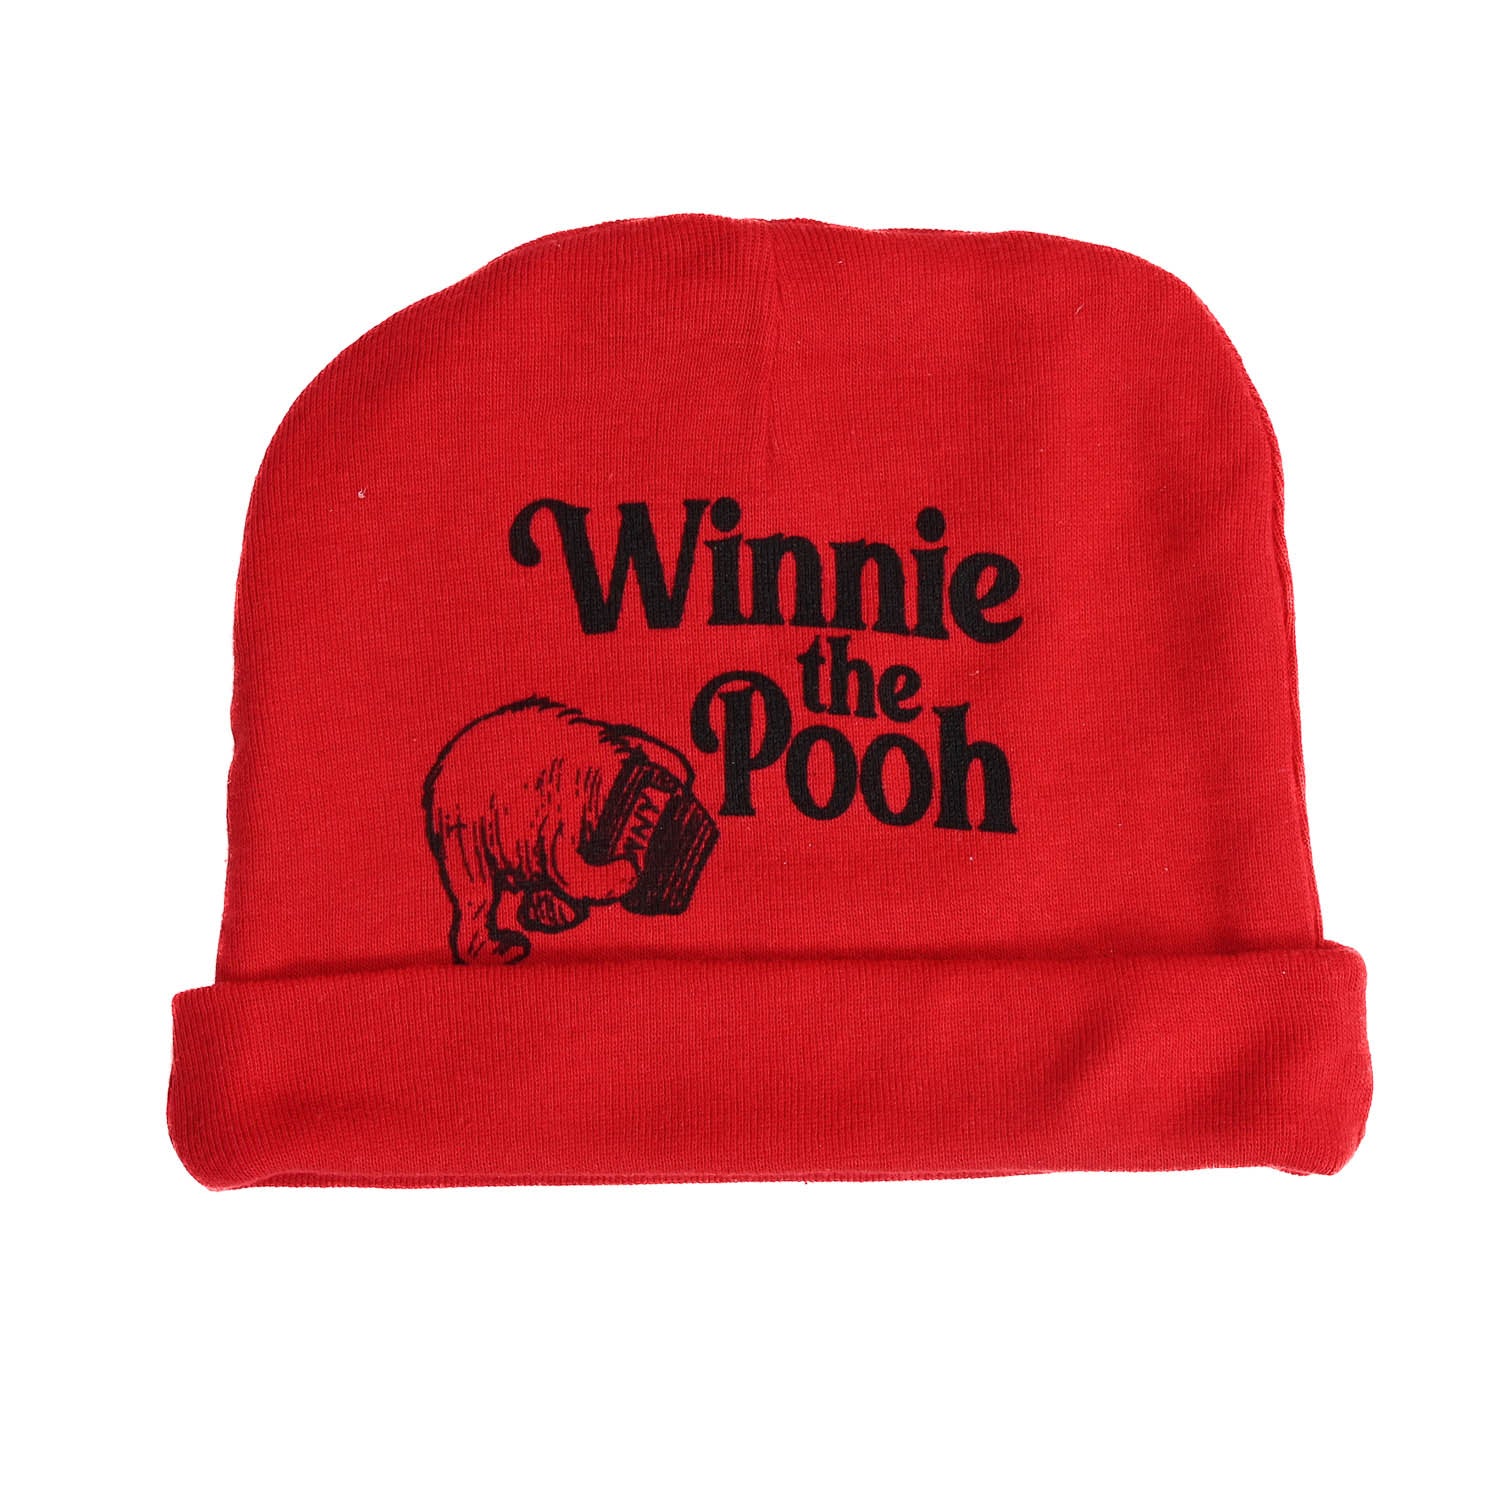 Winnie-the-Pooh Baby Hat